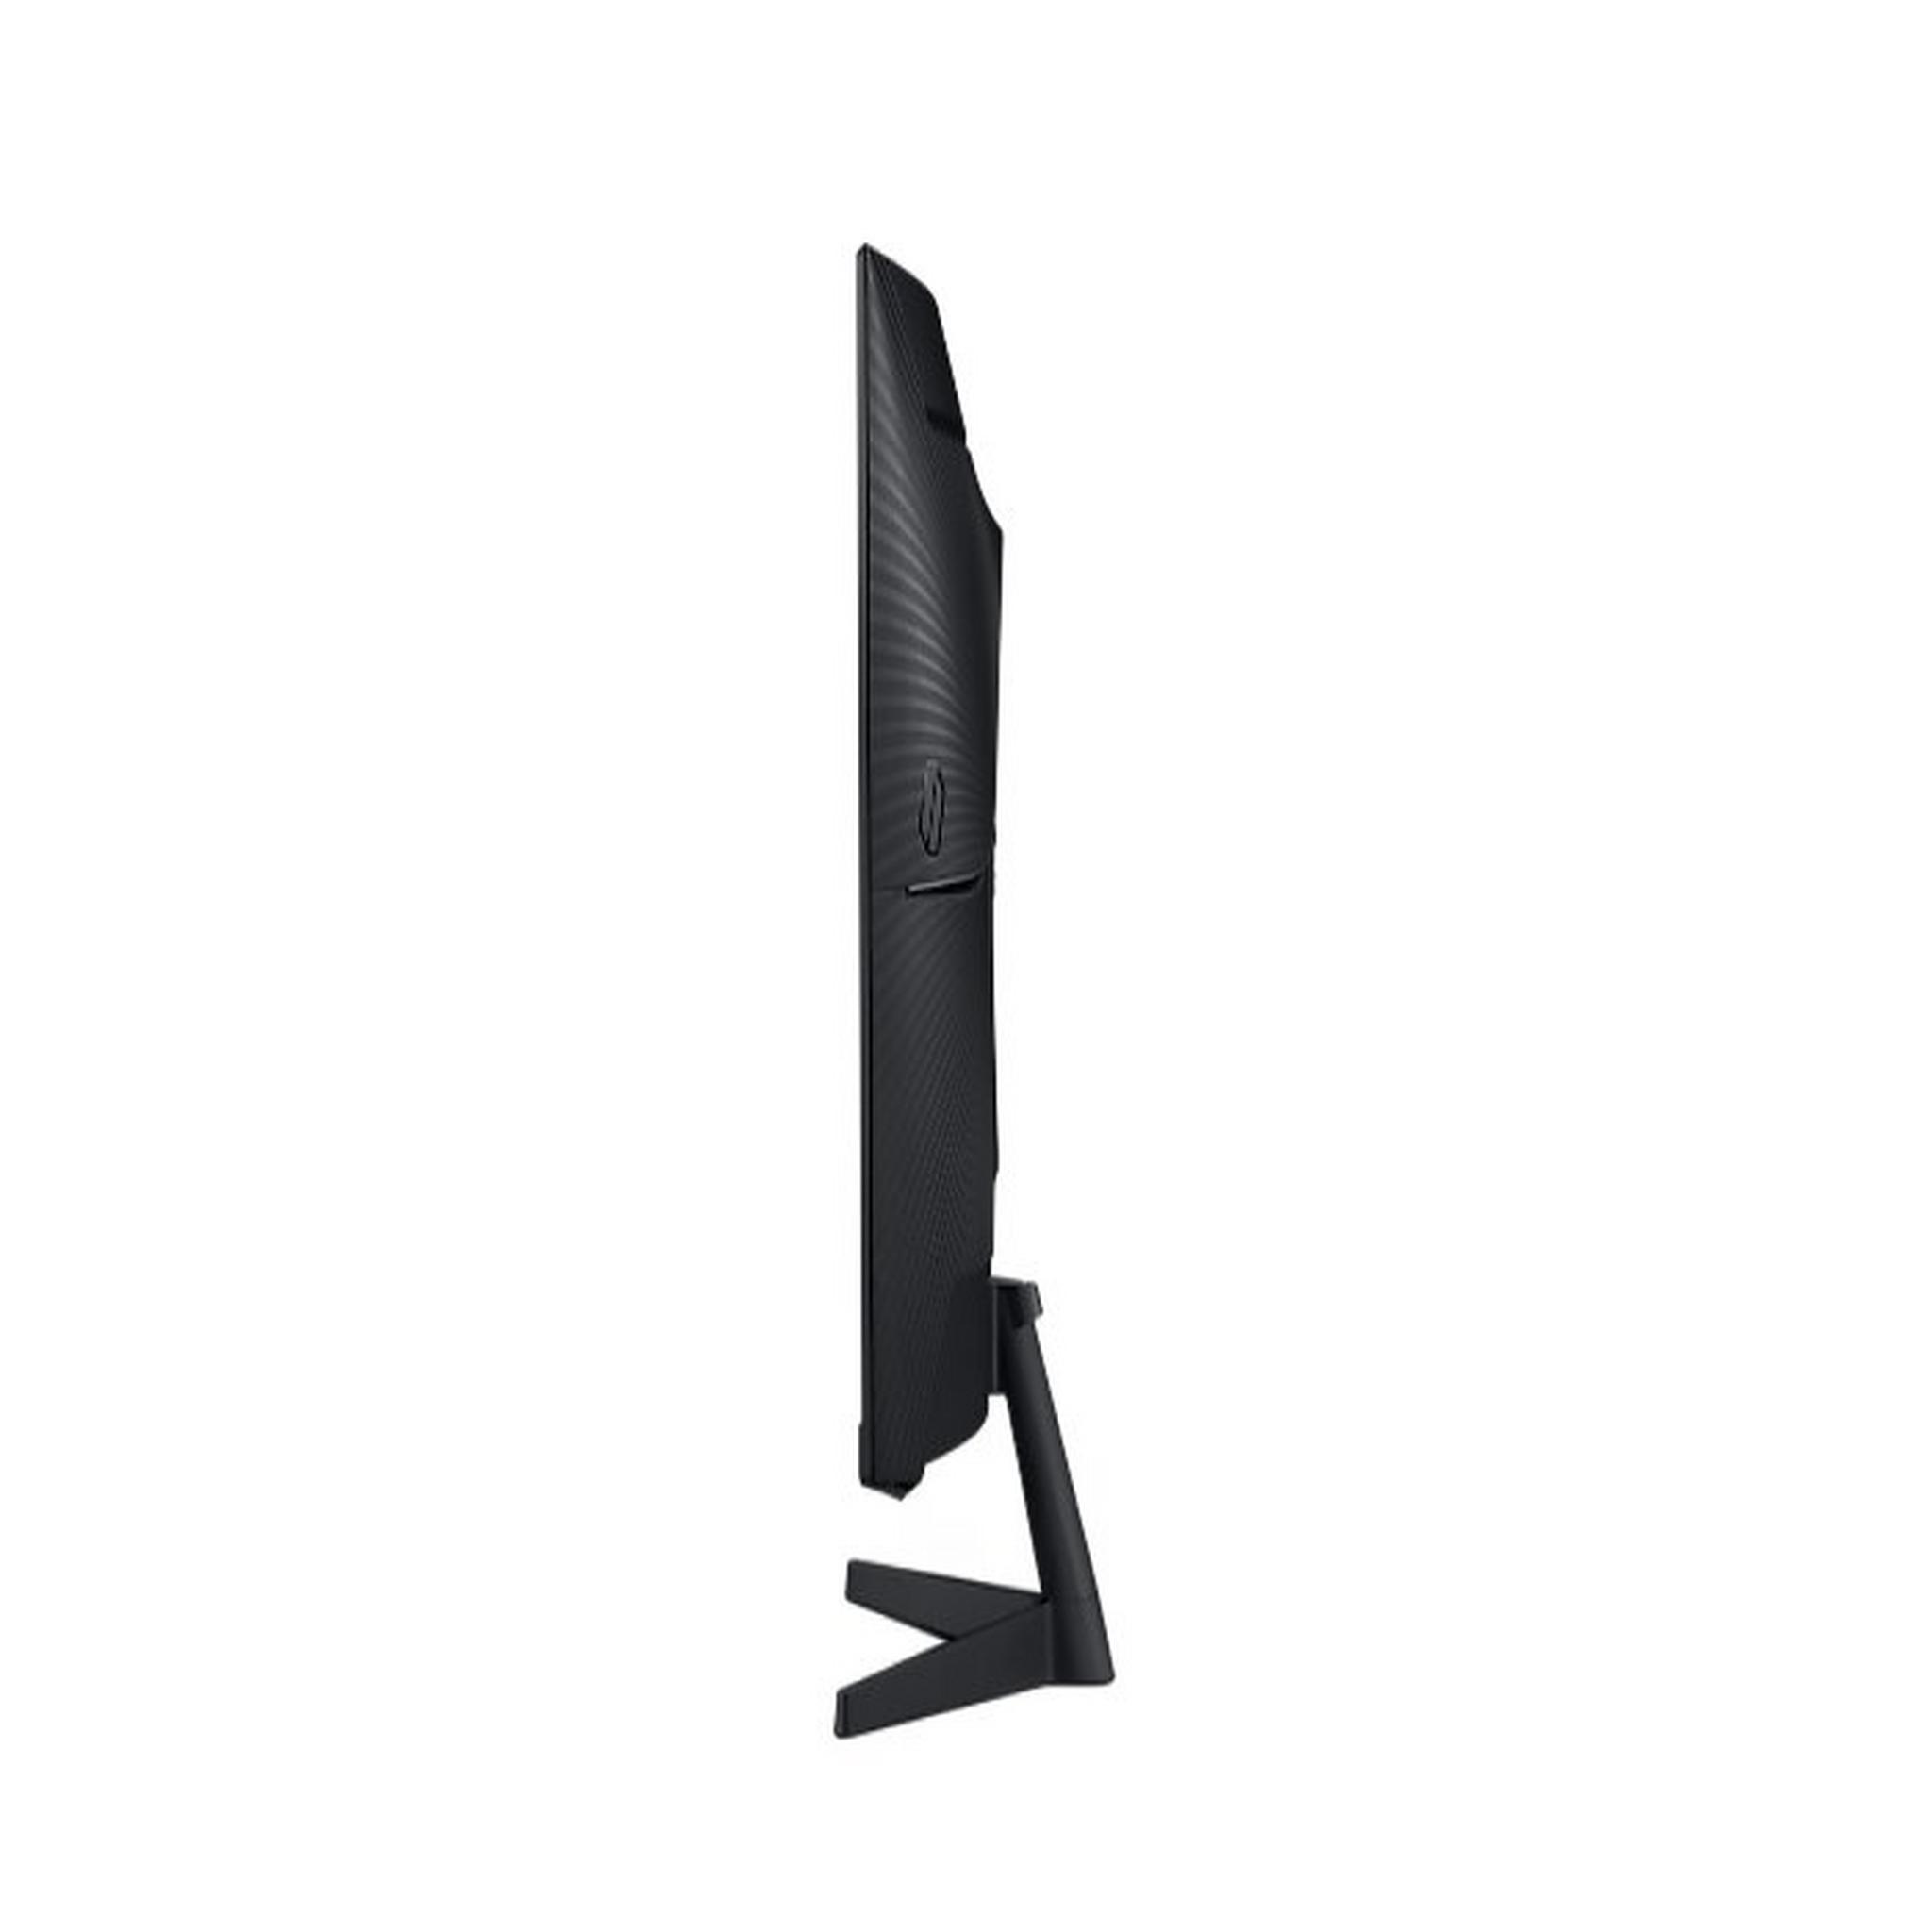 Samsung G5 Odyssey 32-Inches WQHD LED 144Hz 1ms curved Gaming Monitor, LC32G55TQBMXUE – Black